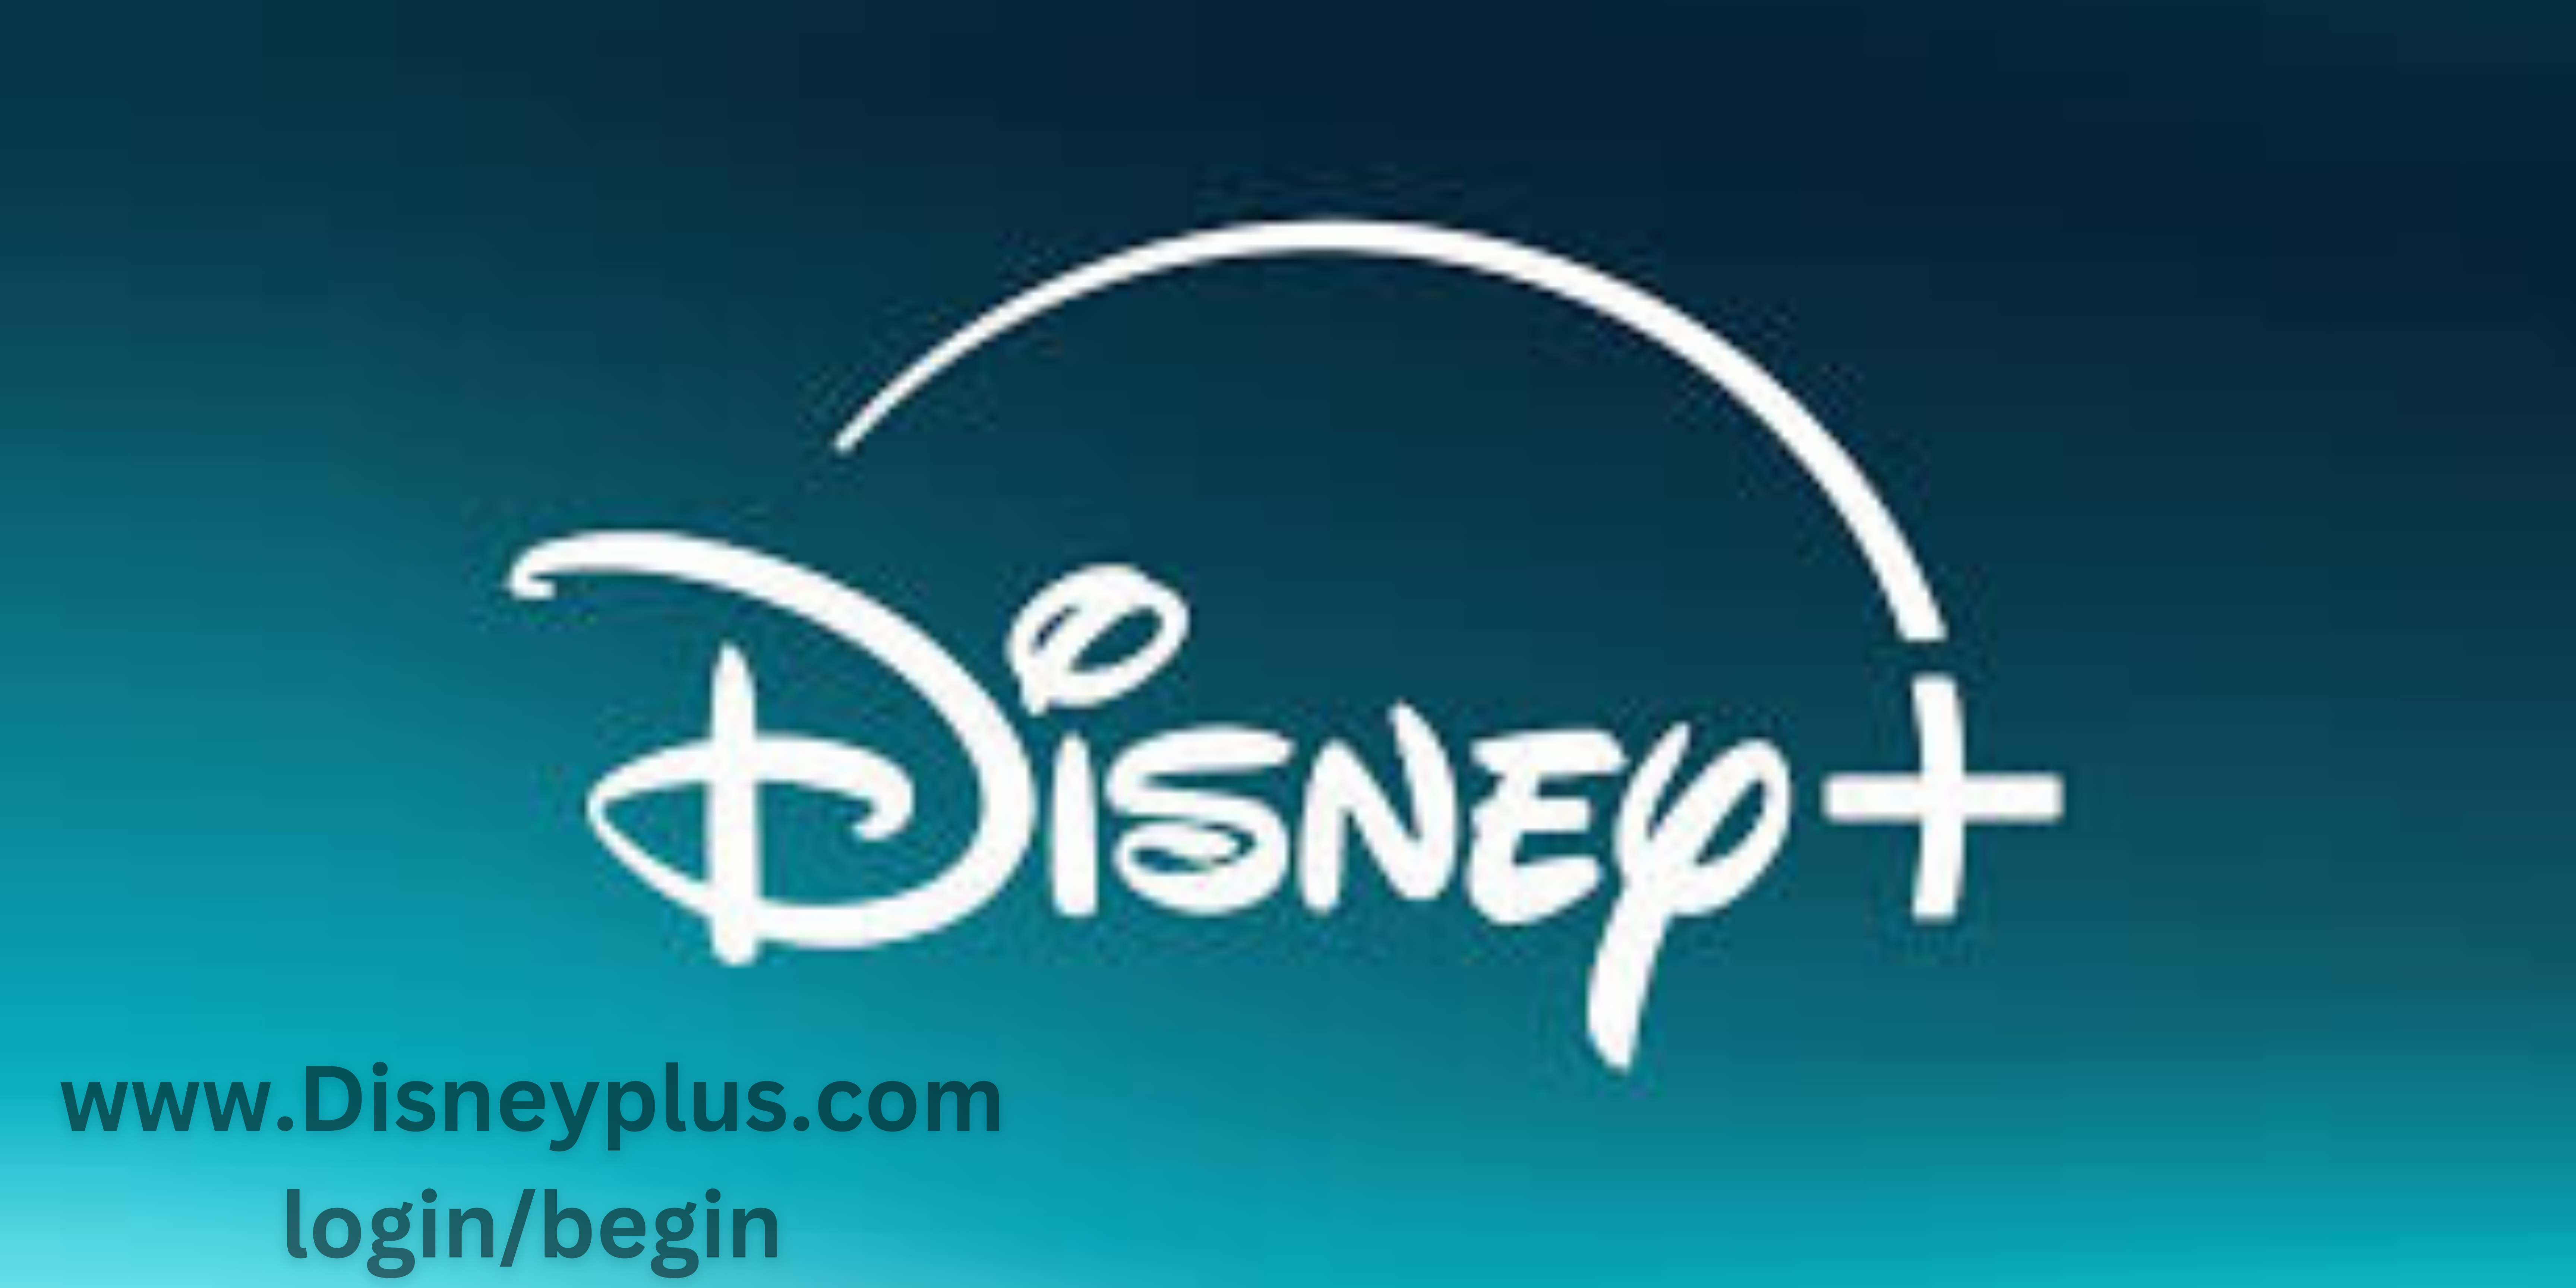 www.Disneyplus.com login/begin